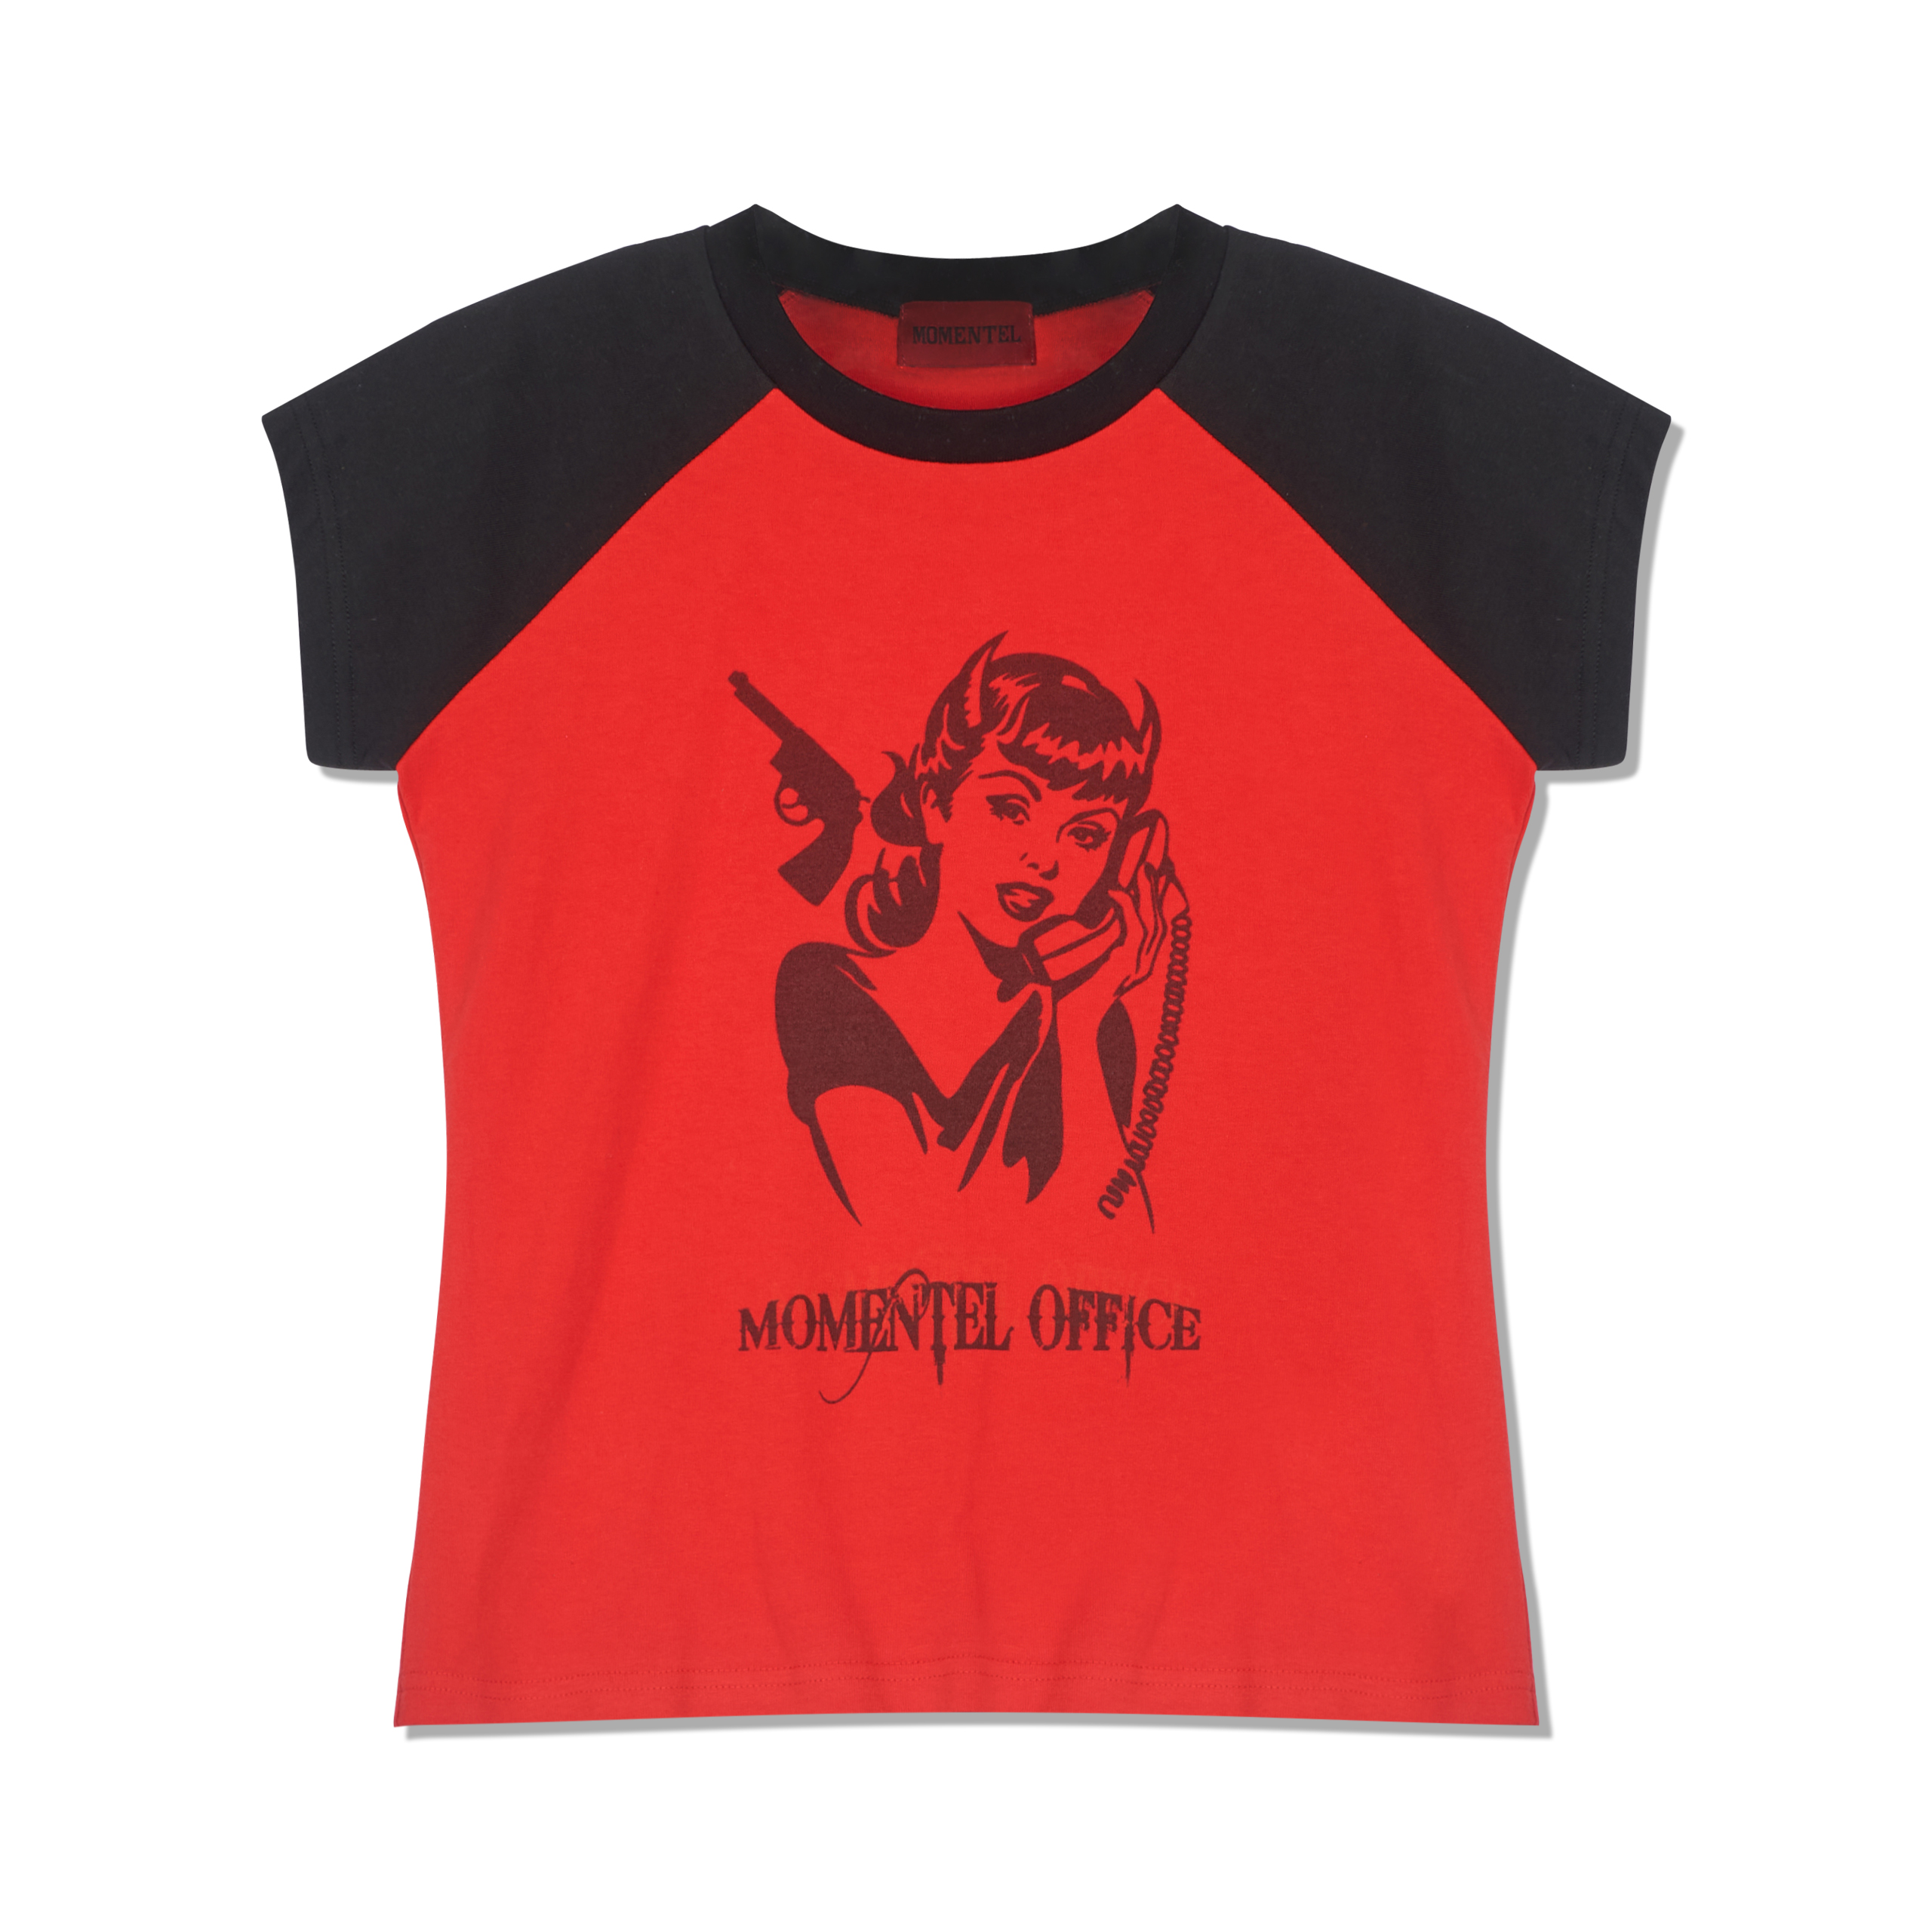 MOMENTELoffice  black red nagrang t-shirt